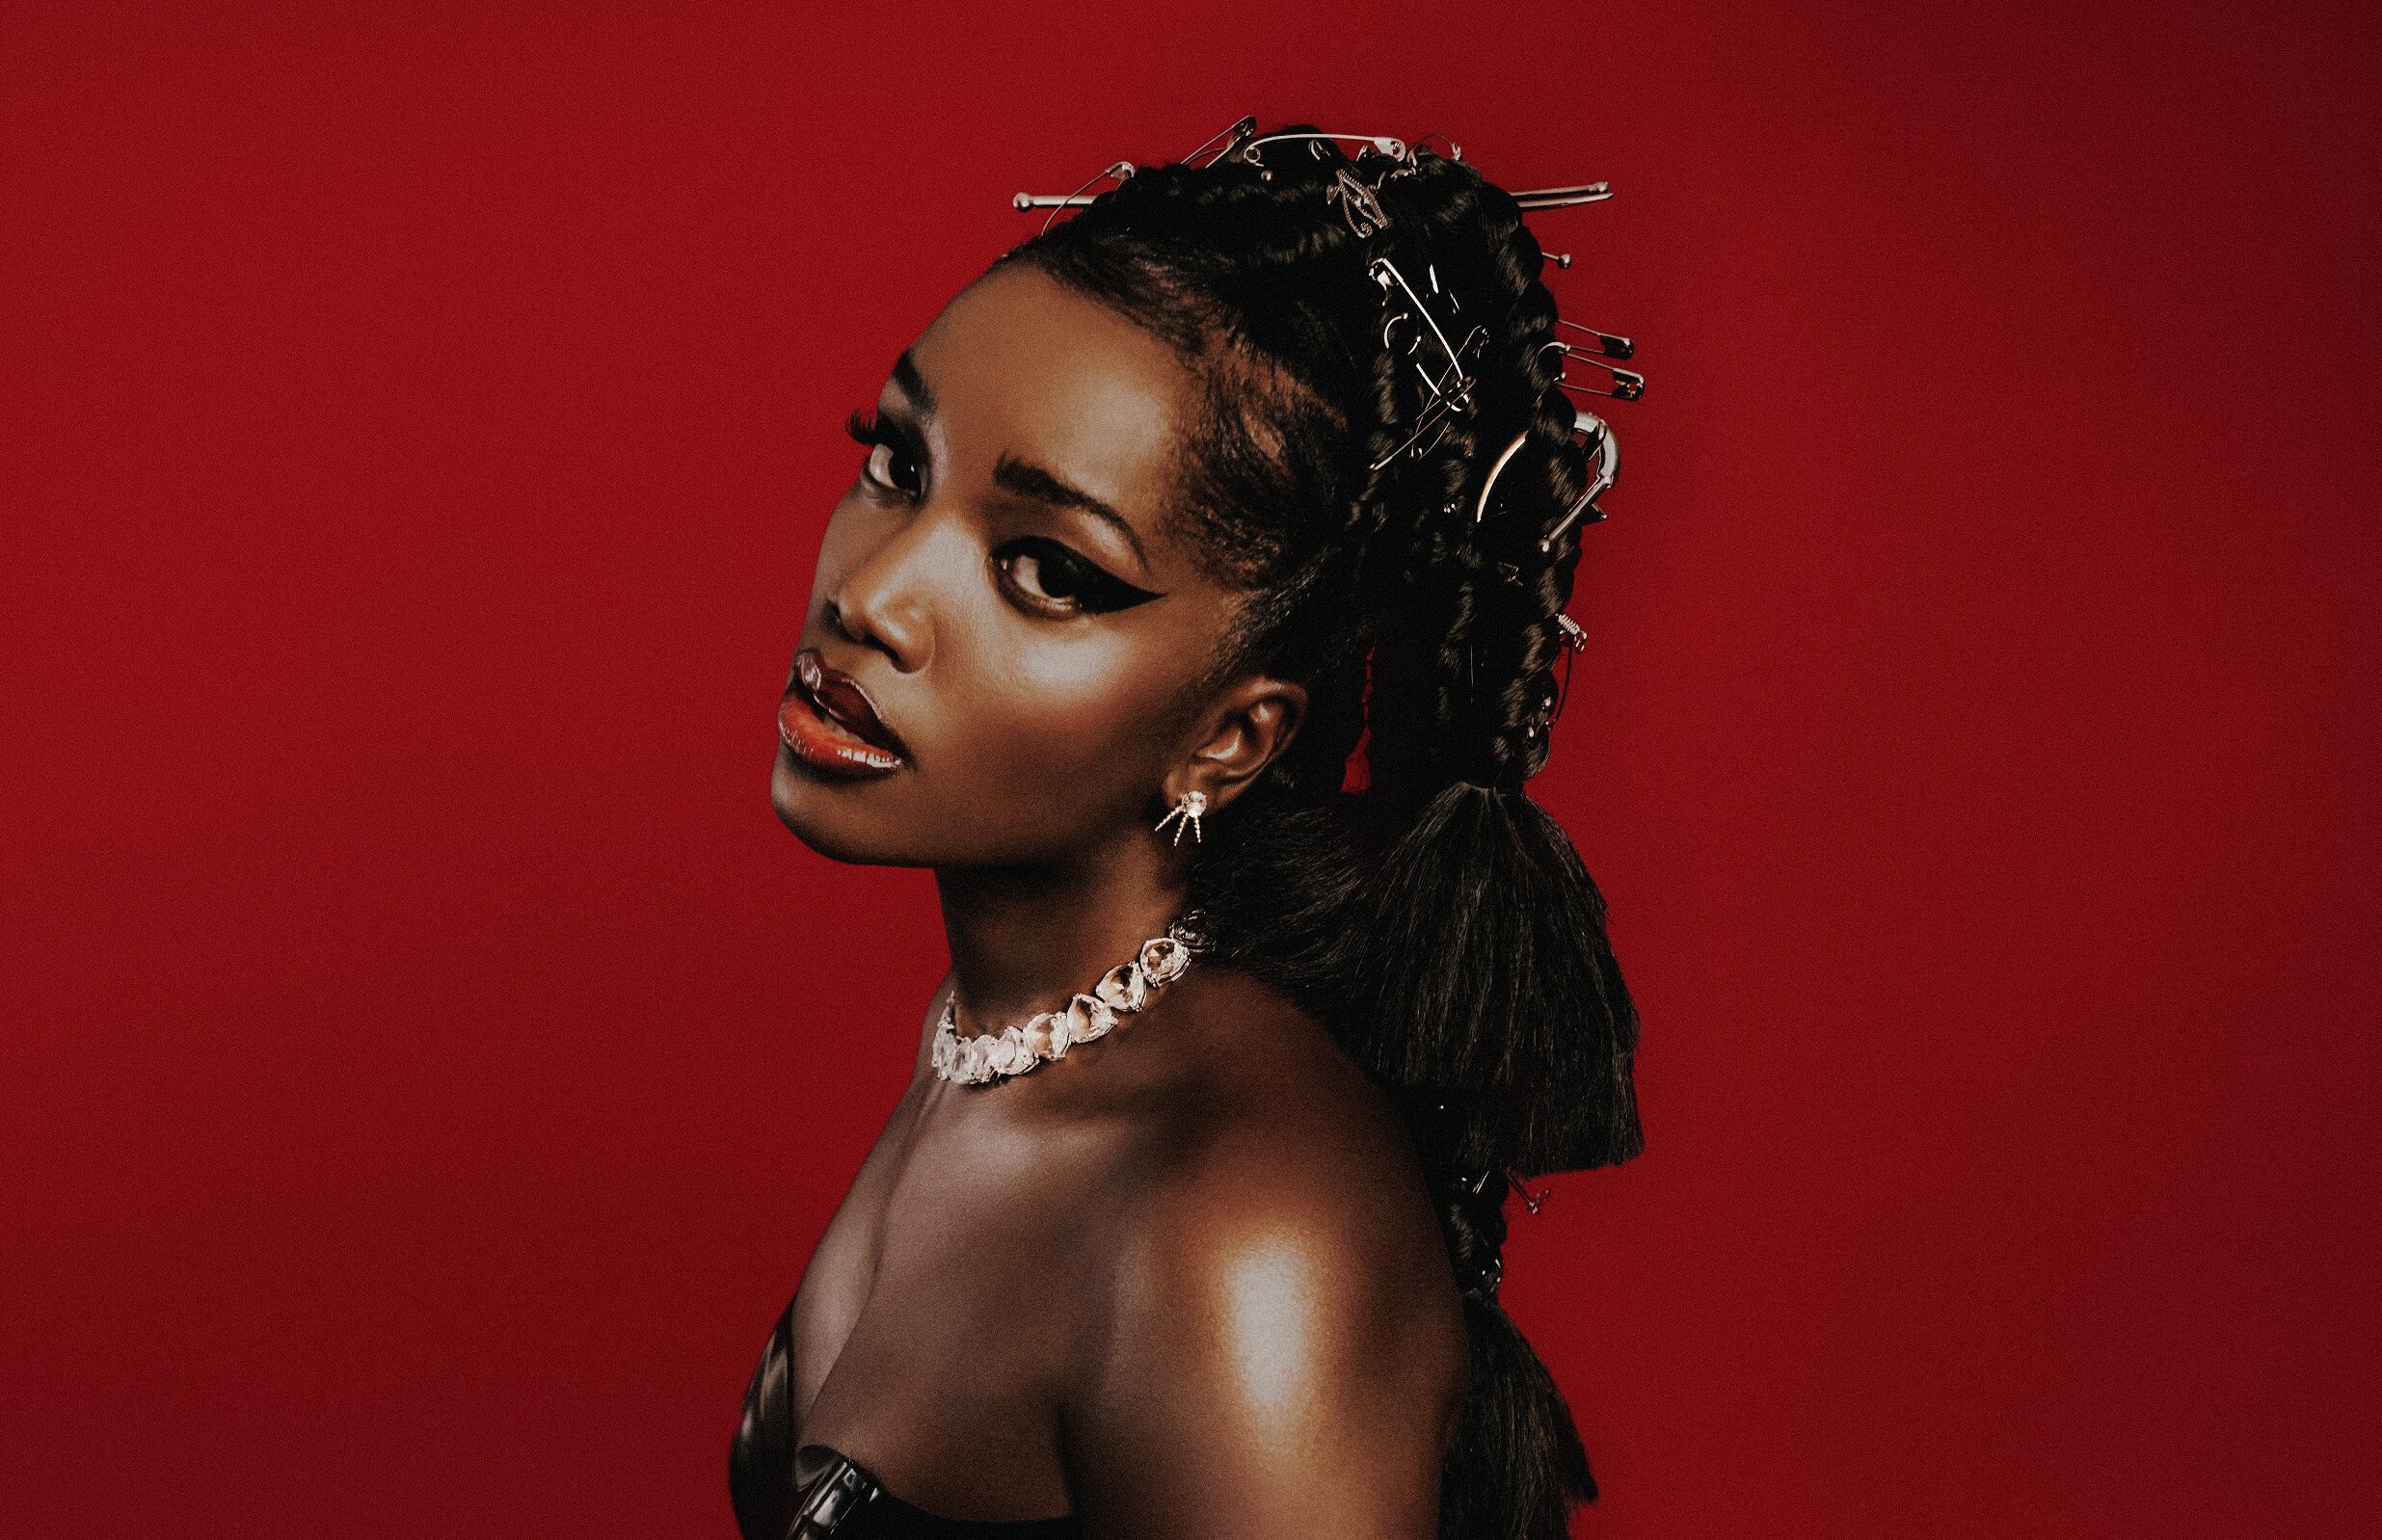 IZA anuncia lançamento de seu segundo álbum musical - Mundo Negro